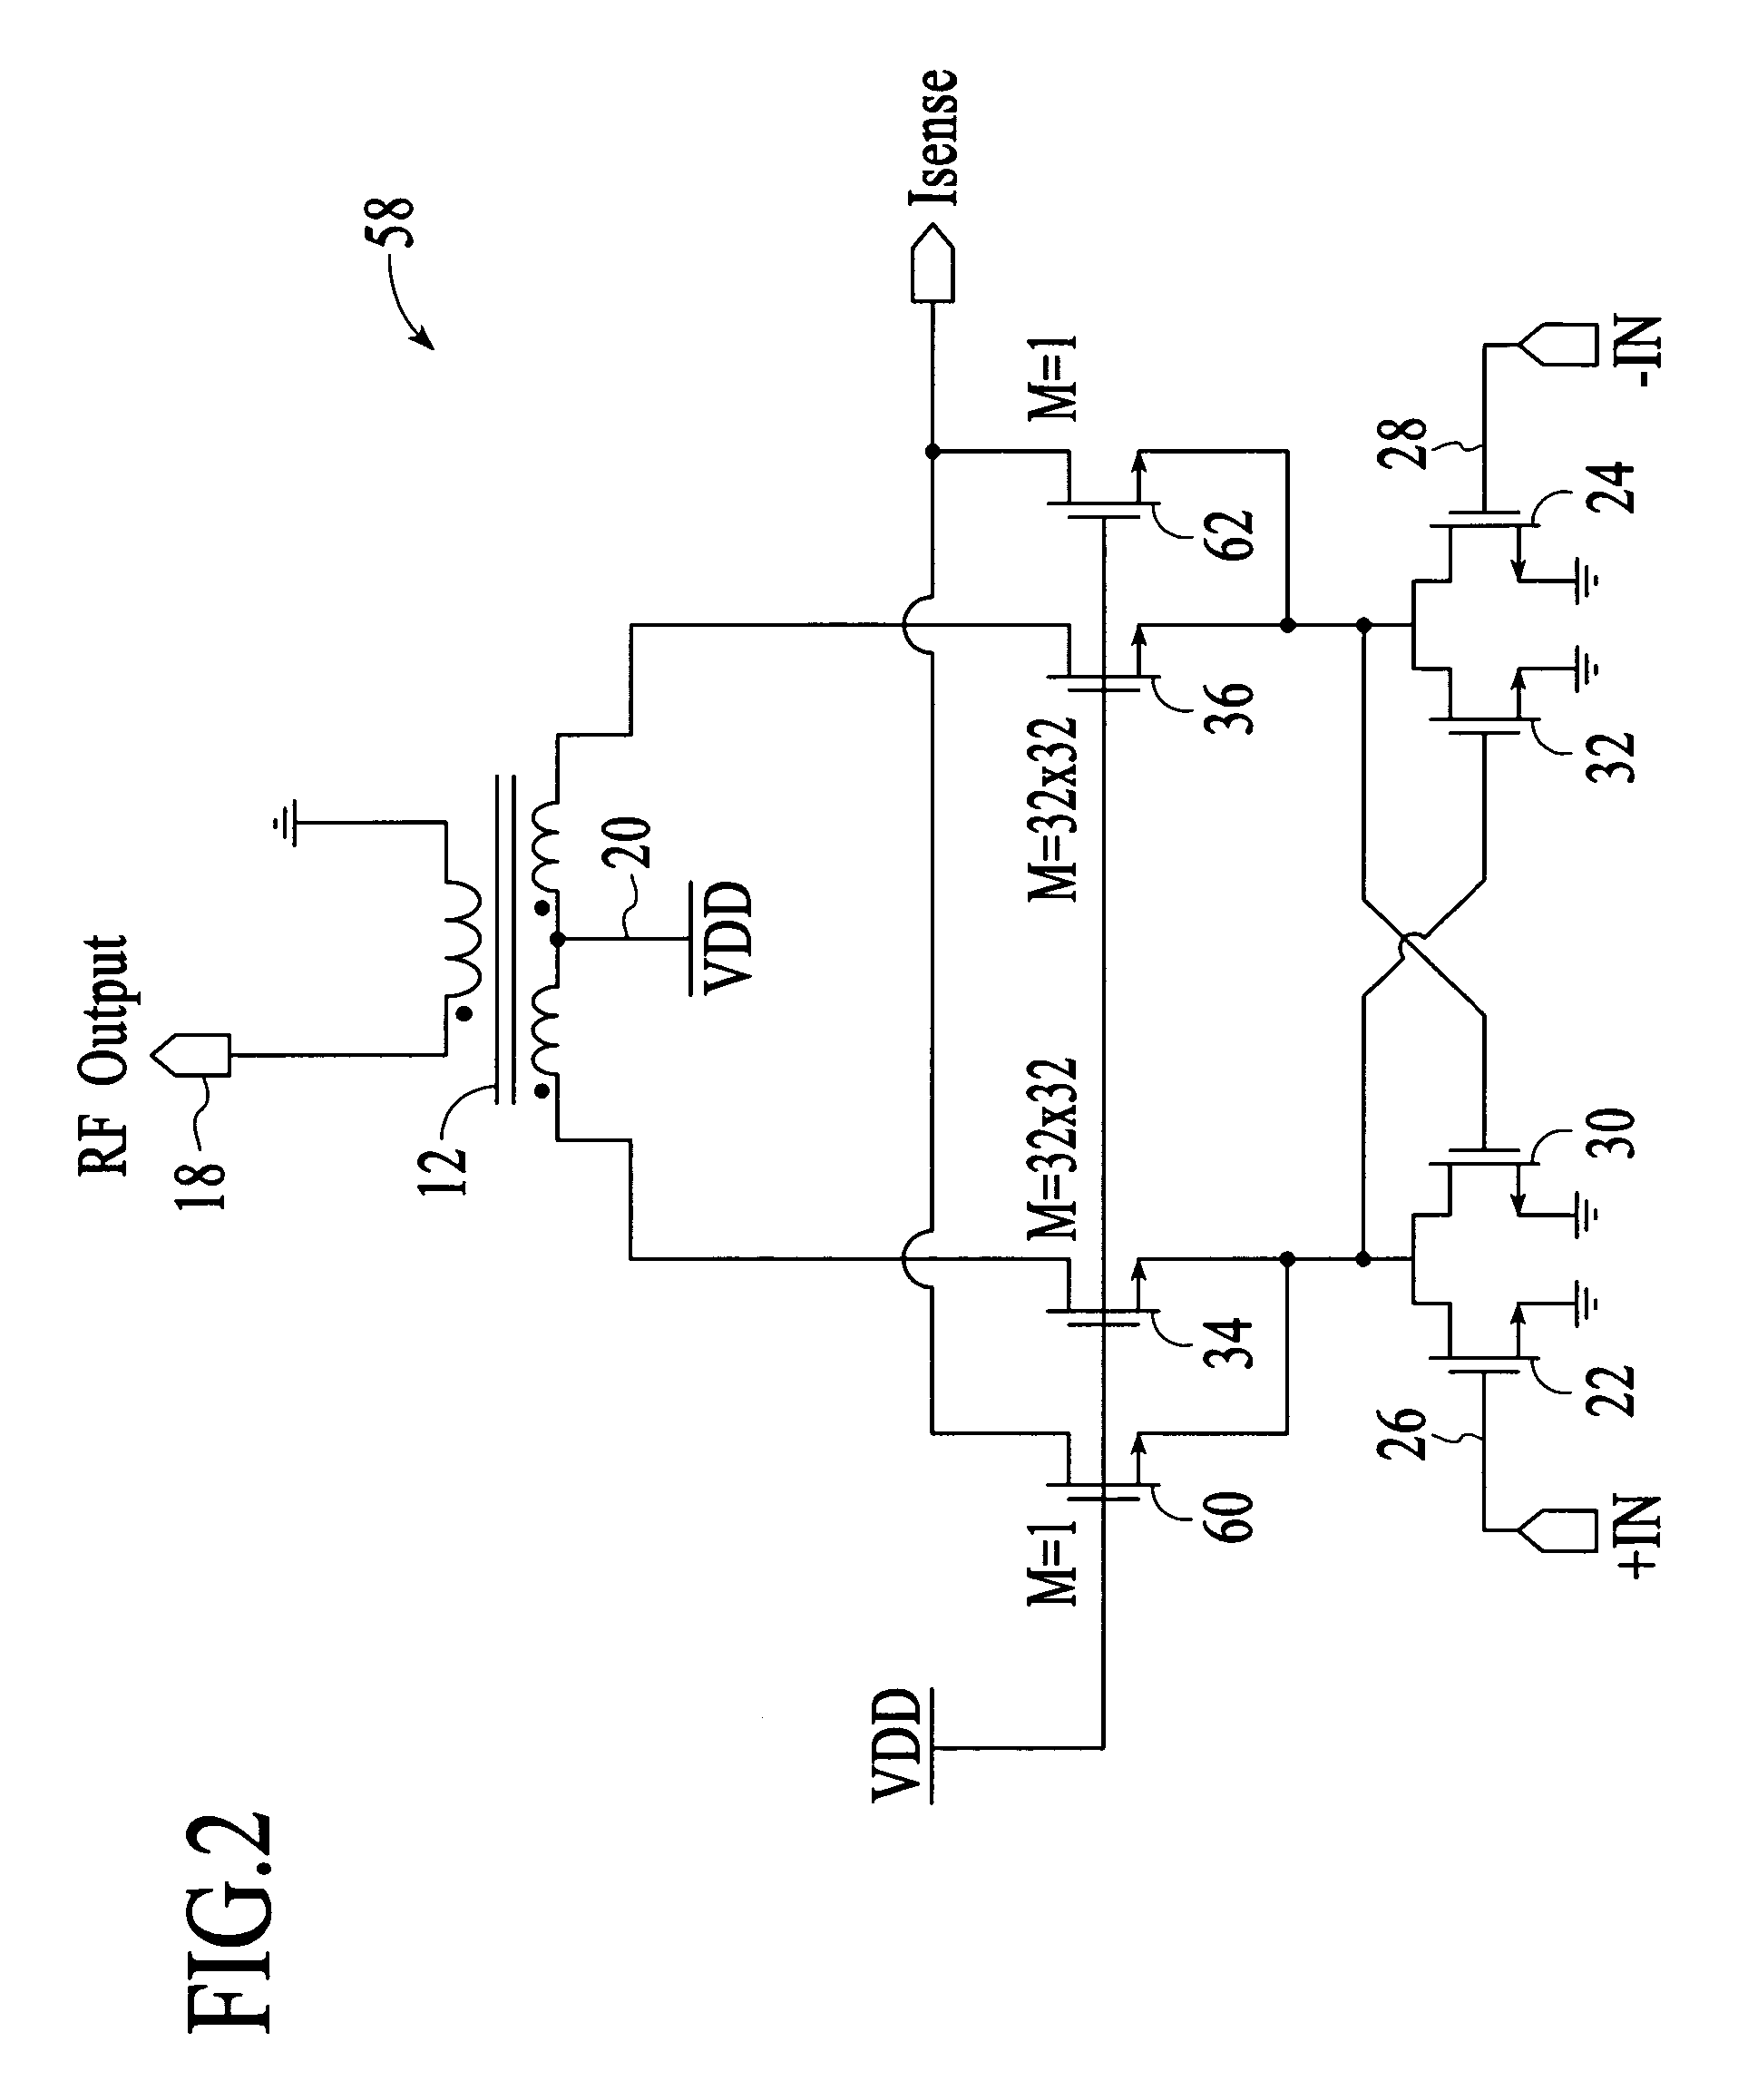 Power amplifier utilizing high breakdown voltage circuit topology